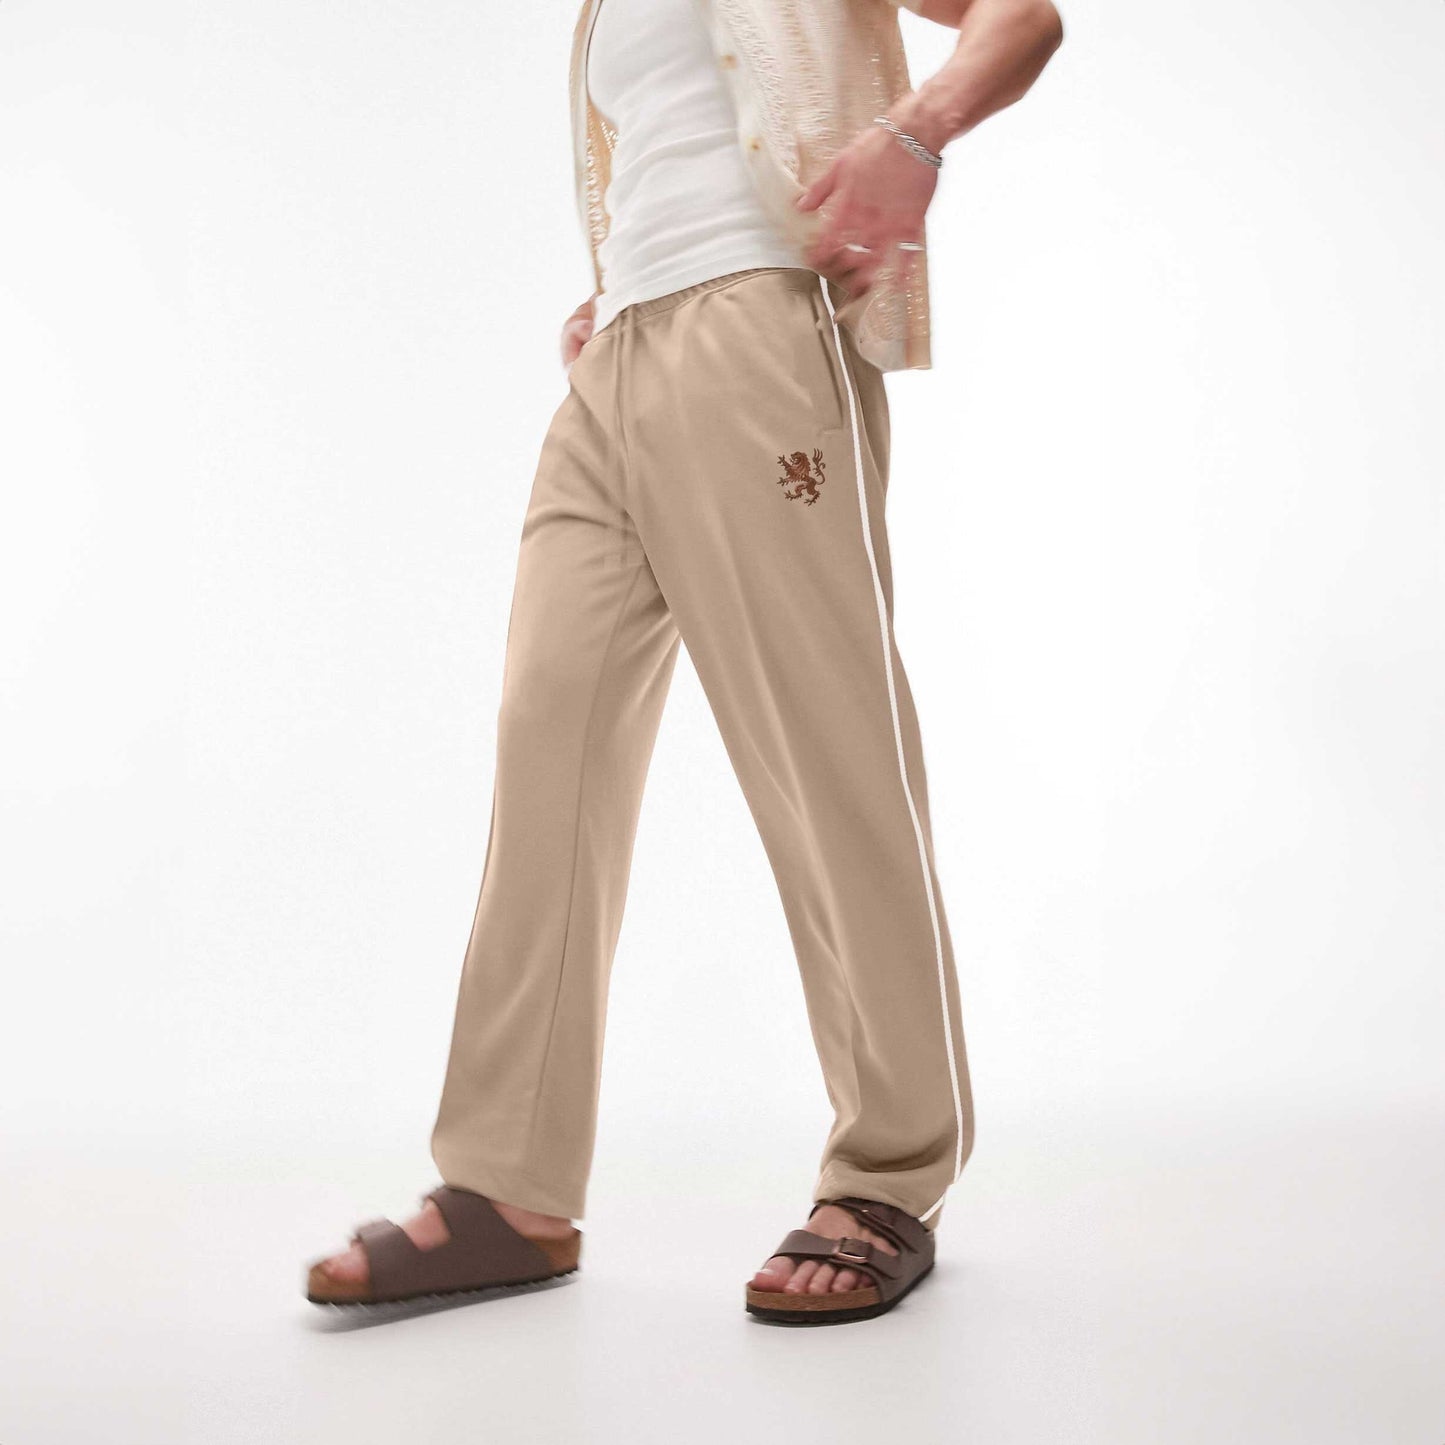 Polo Republica Men's Lion Crest Embroidered Terry Trousers Men's Trousers Polo Republica Skin S 